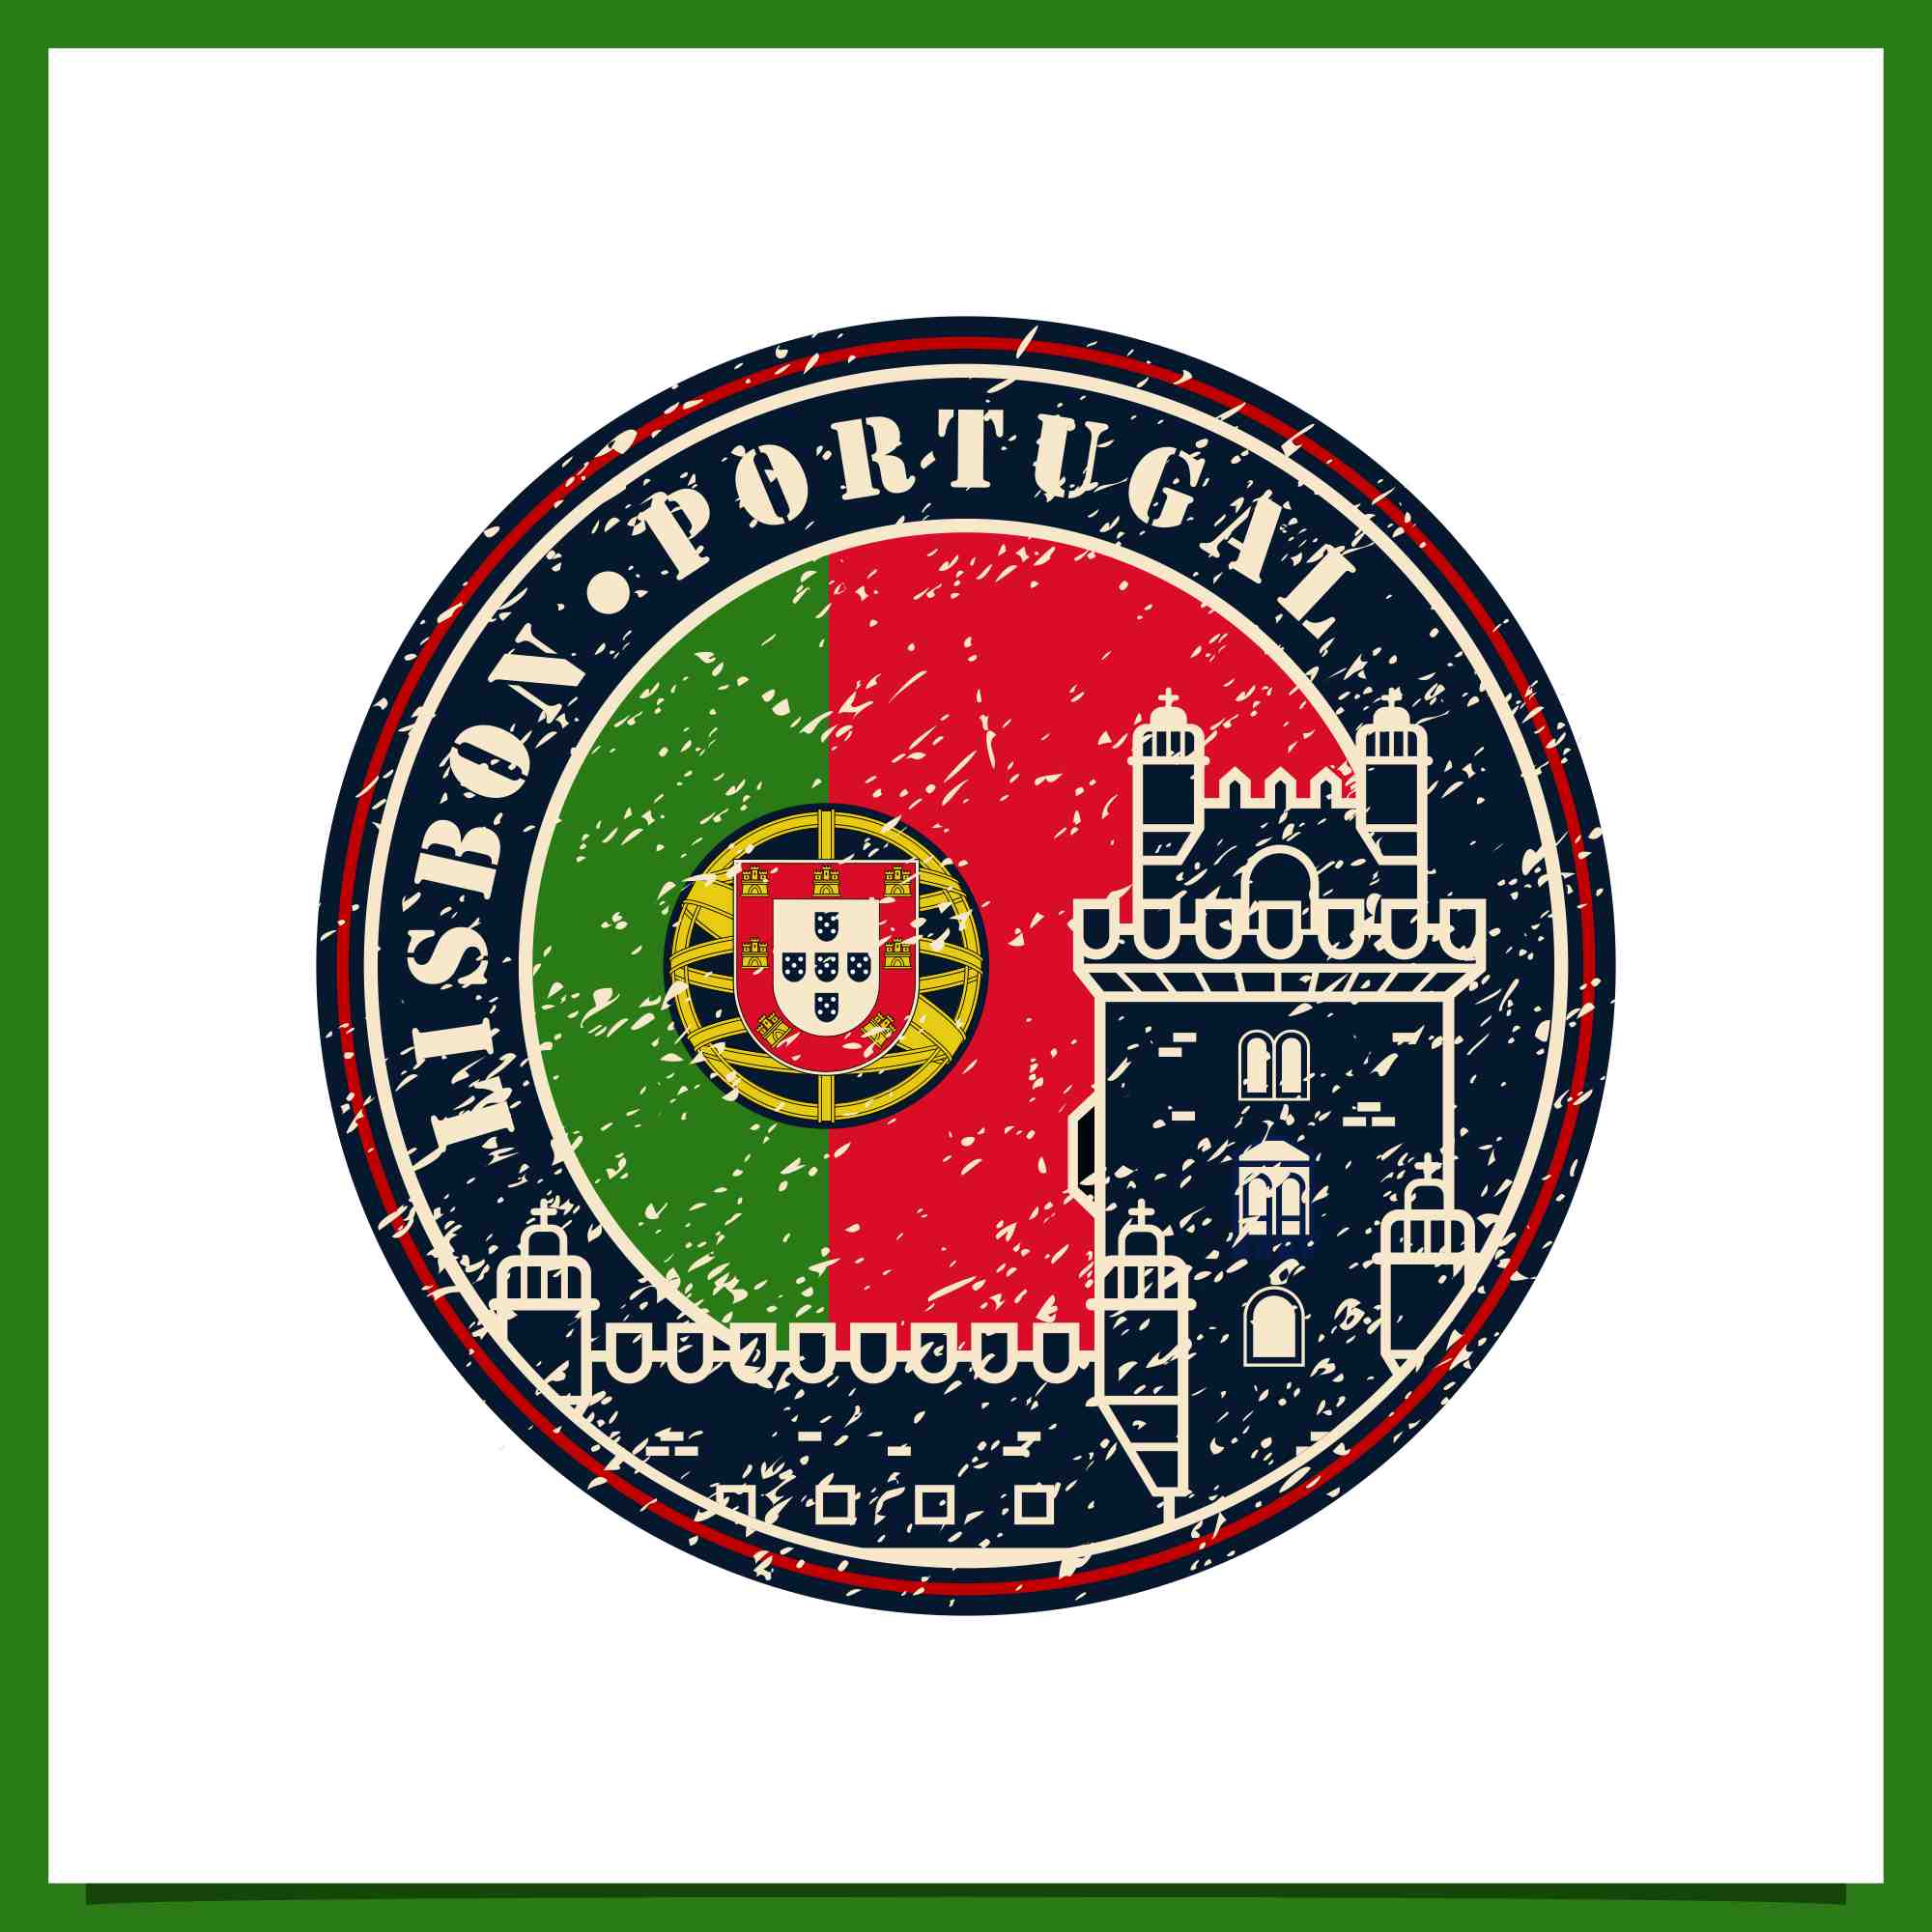 Lisbon portugal vector logo design collection - $4 preview image.